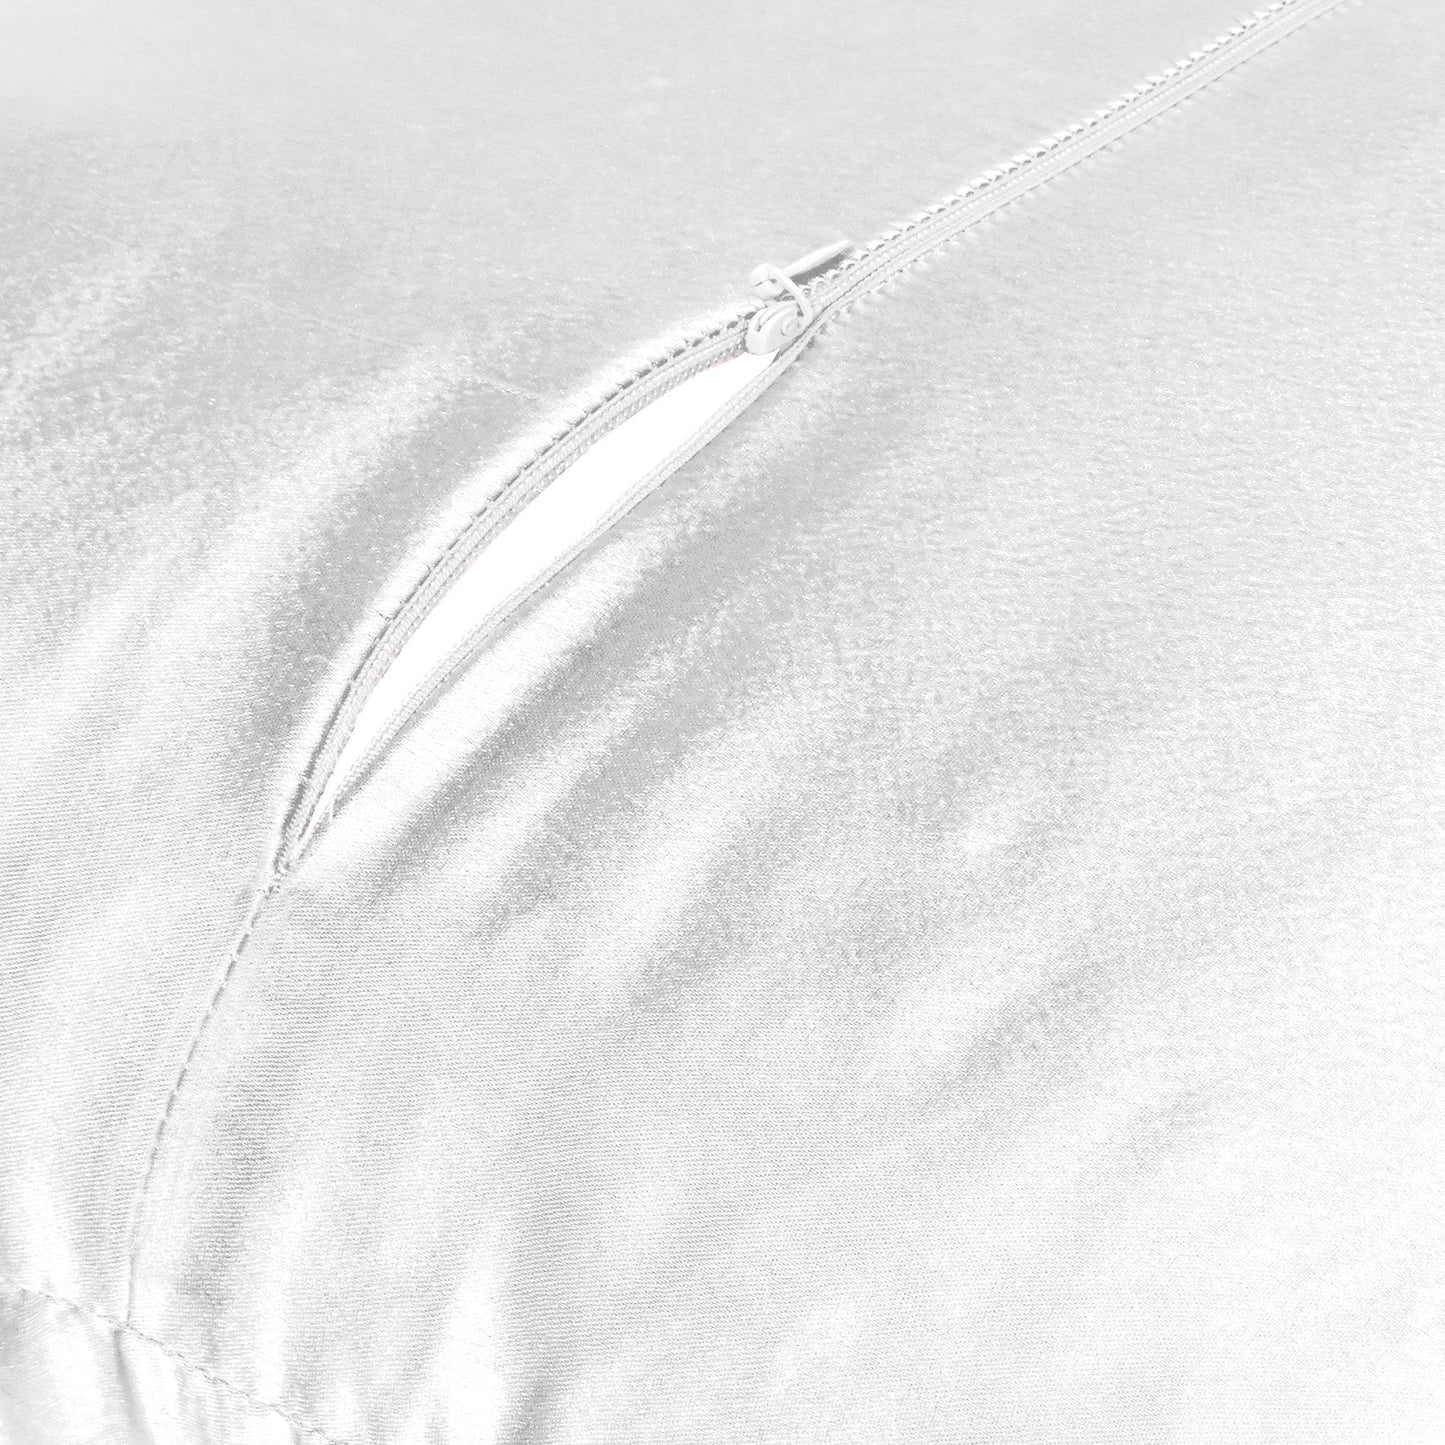 Blanc De Blanc Satin Silky Cushion Covers in Set of 2